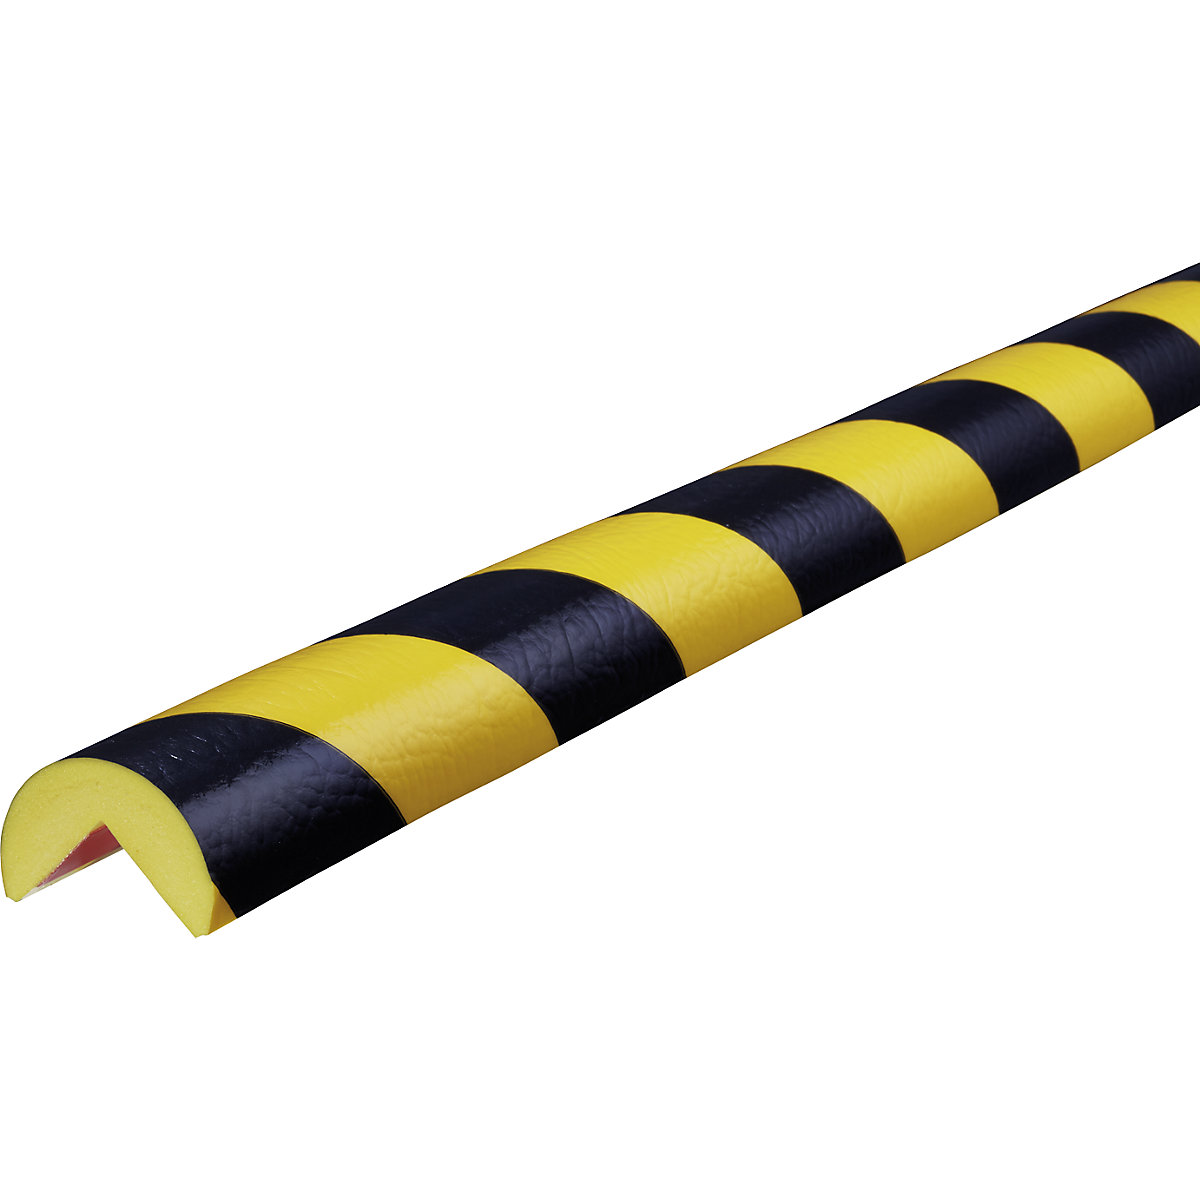 Knuffi® corner protection – SHG, type A, 1 x 5 m roll, black / yellow-19